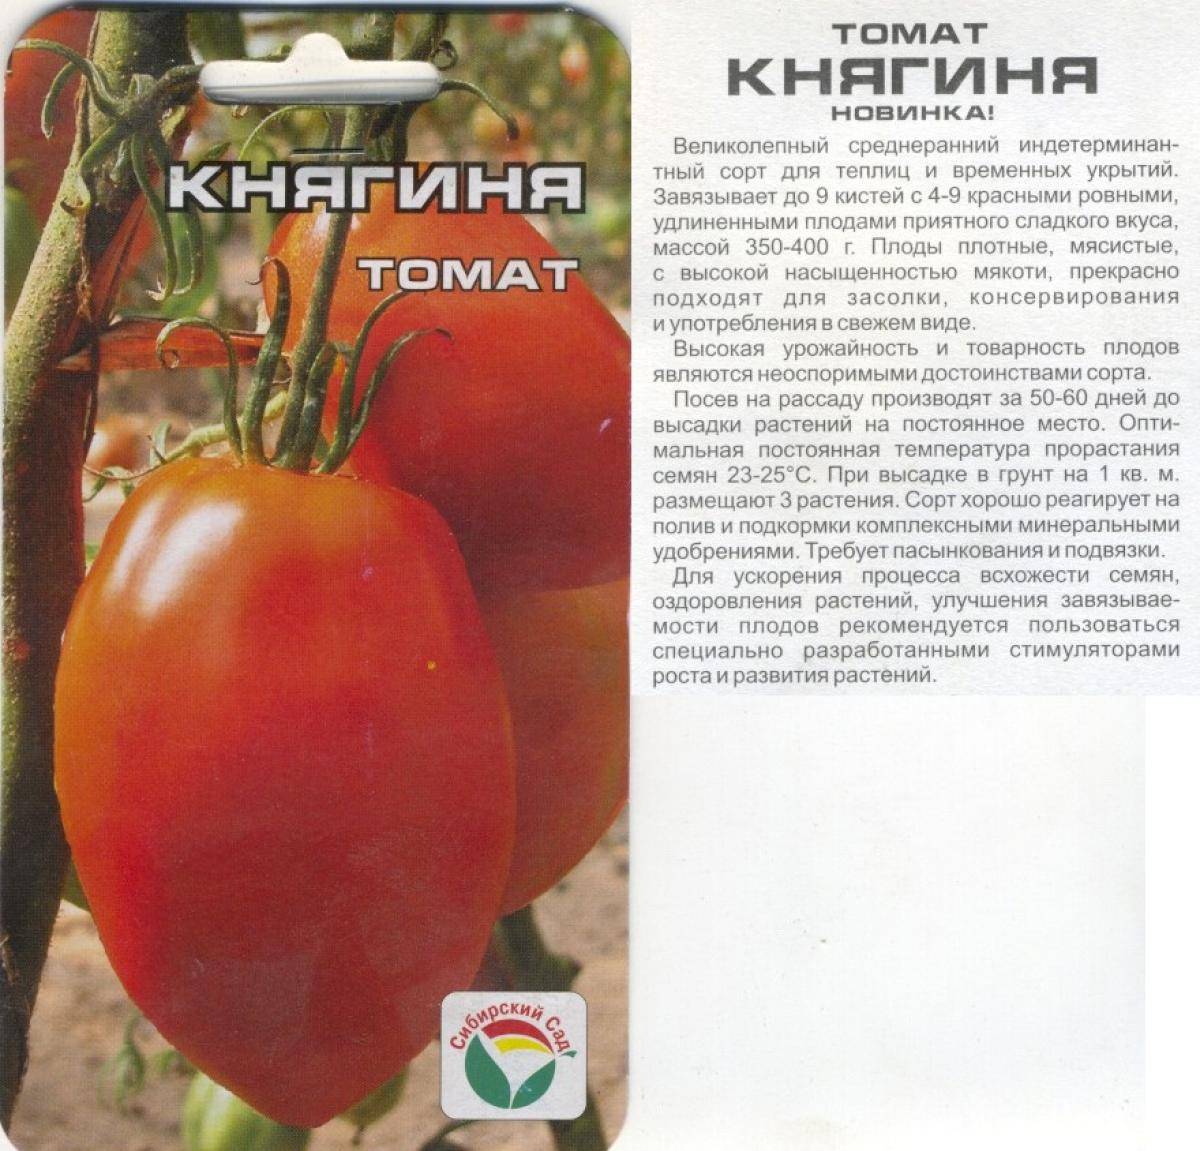 Описание томата клубничное дерево от фирмы сибирский сад